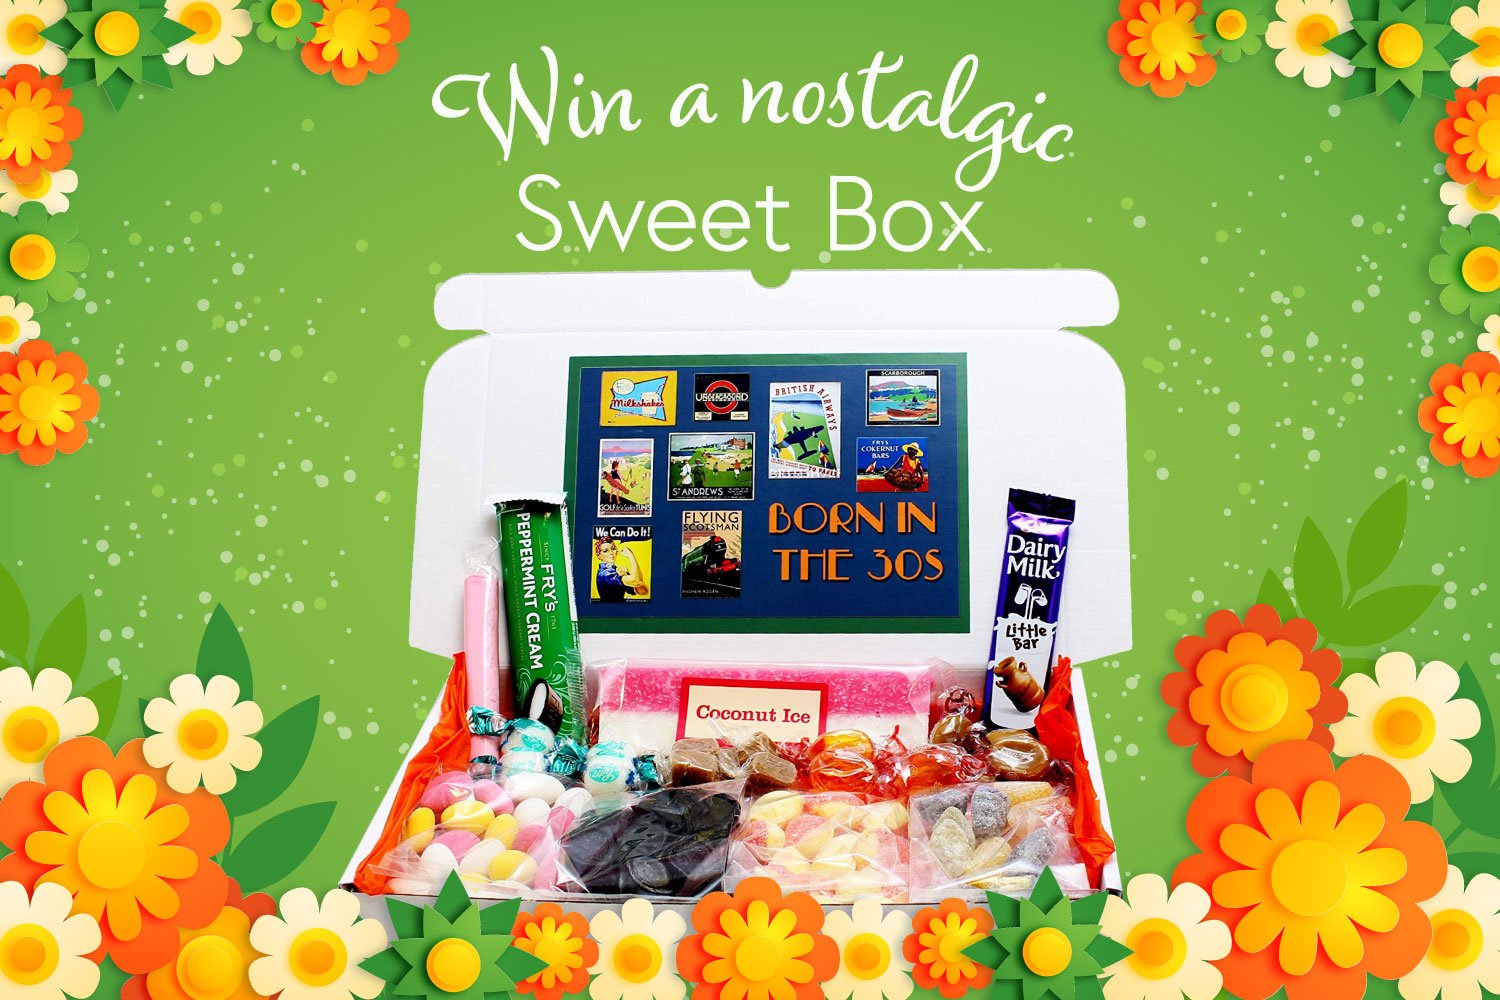 Win a nostalgic sweet box from oak tree